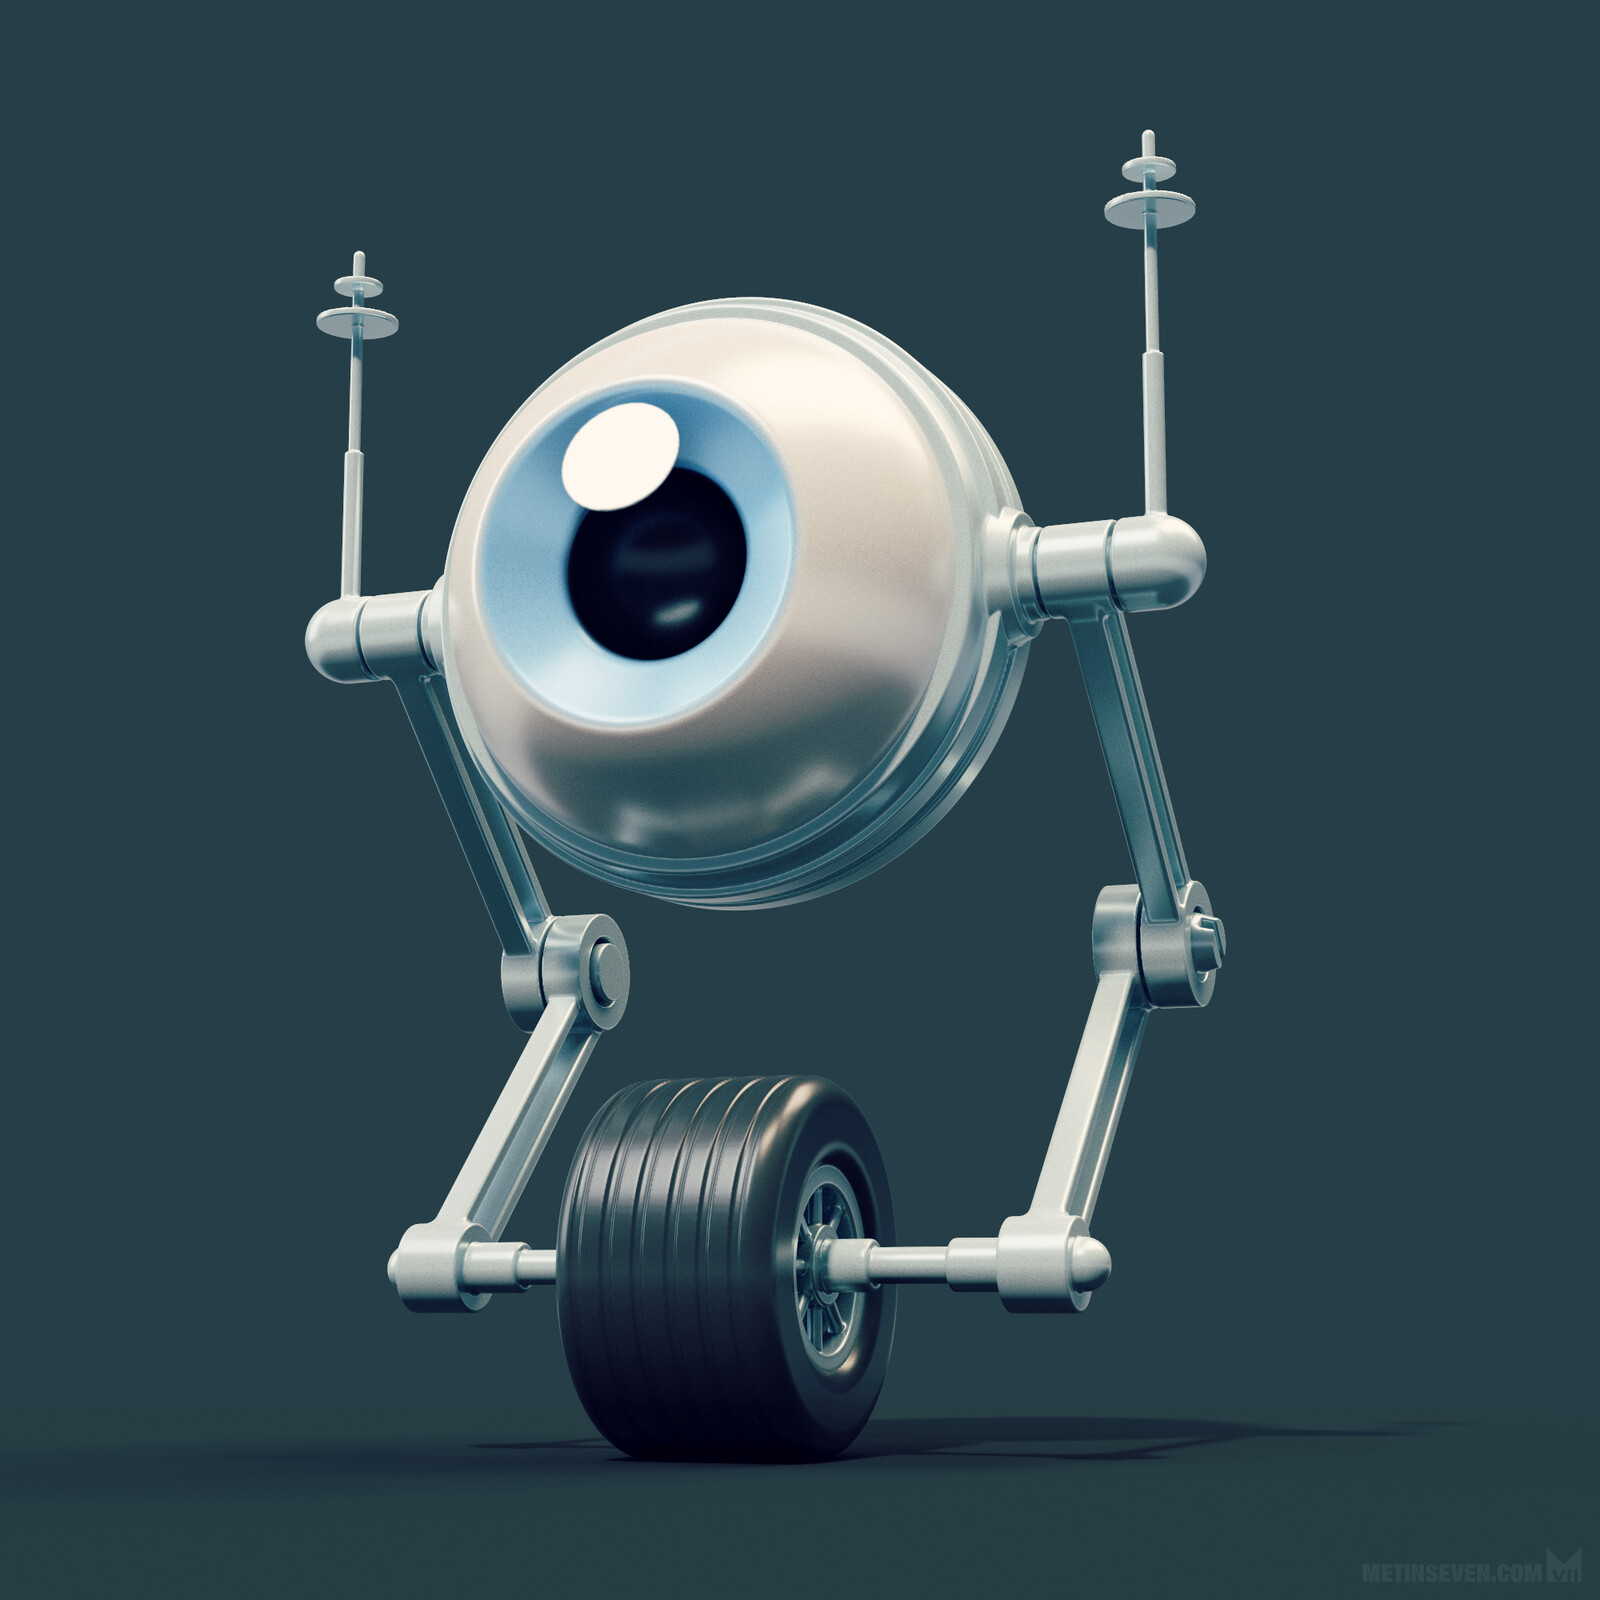 🤖 Wi-Feye robot character concept